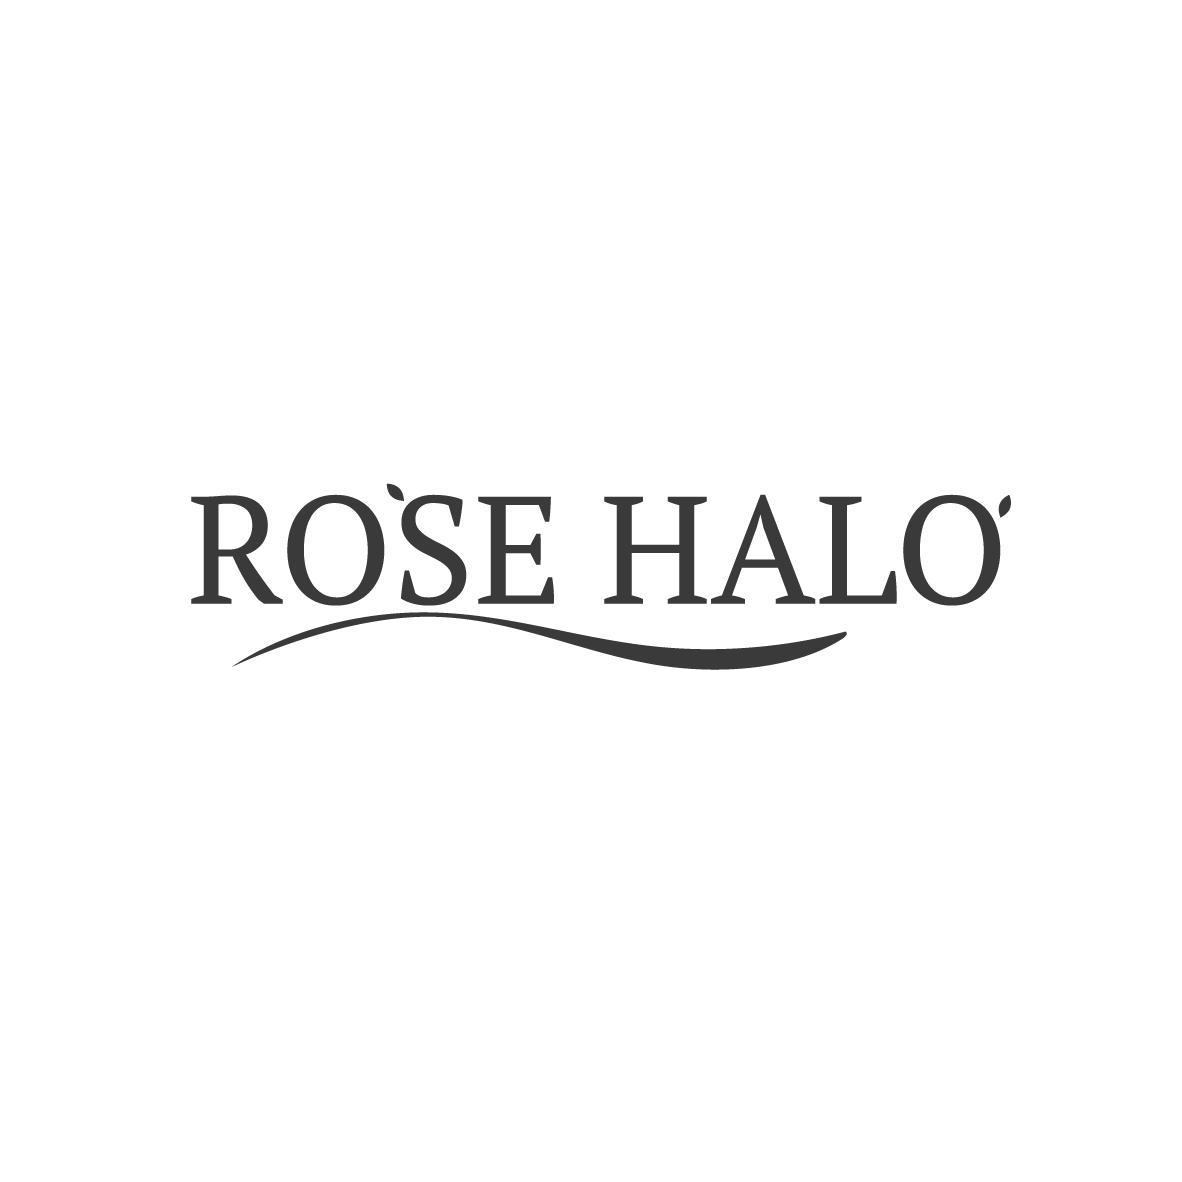 ROSE HALO商标转让